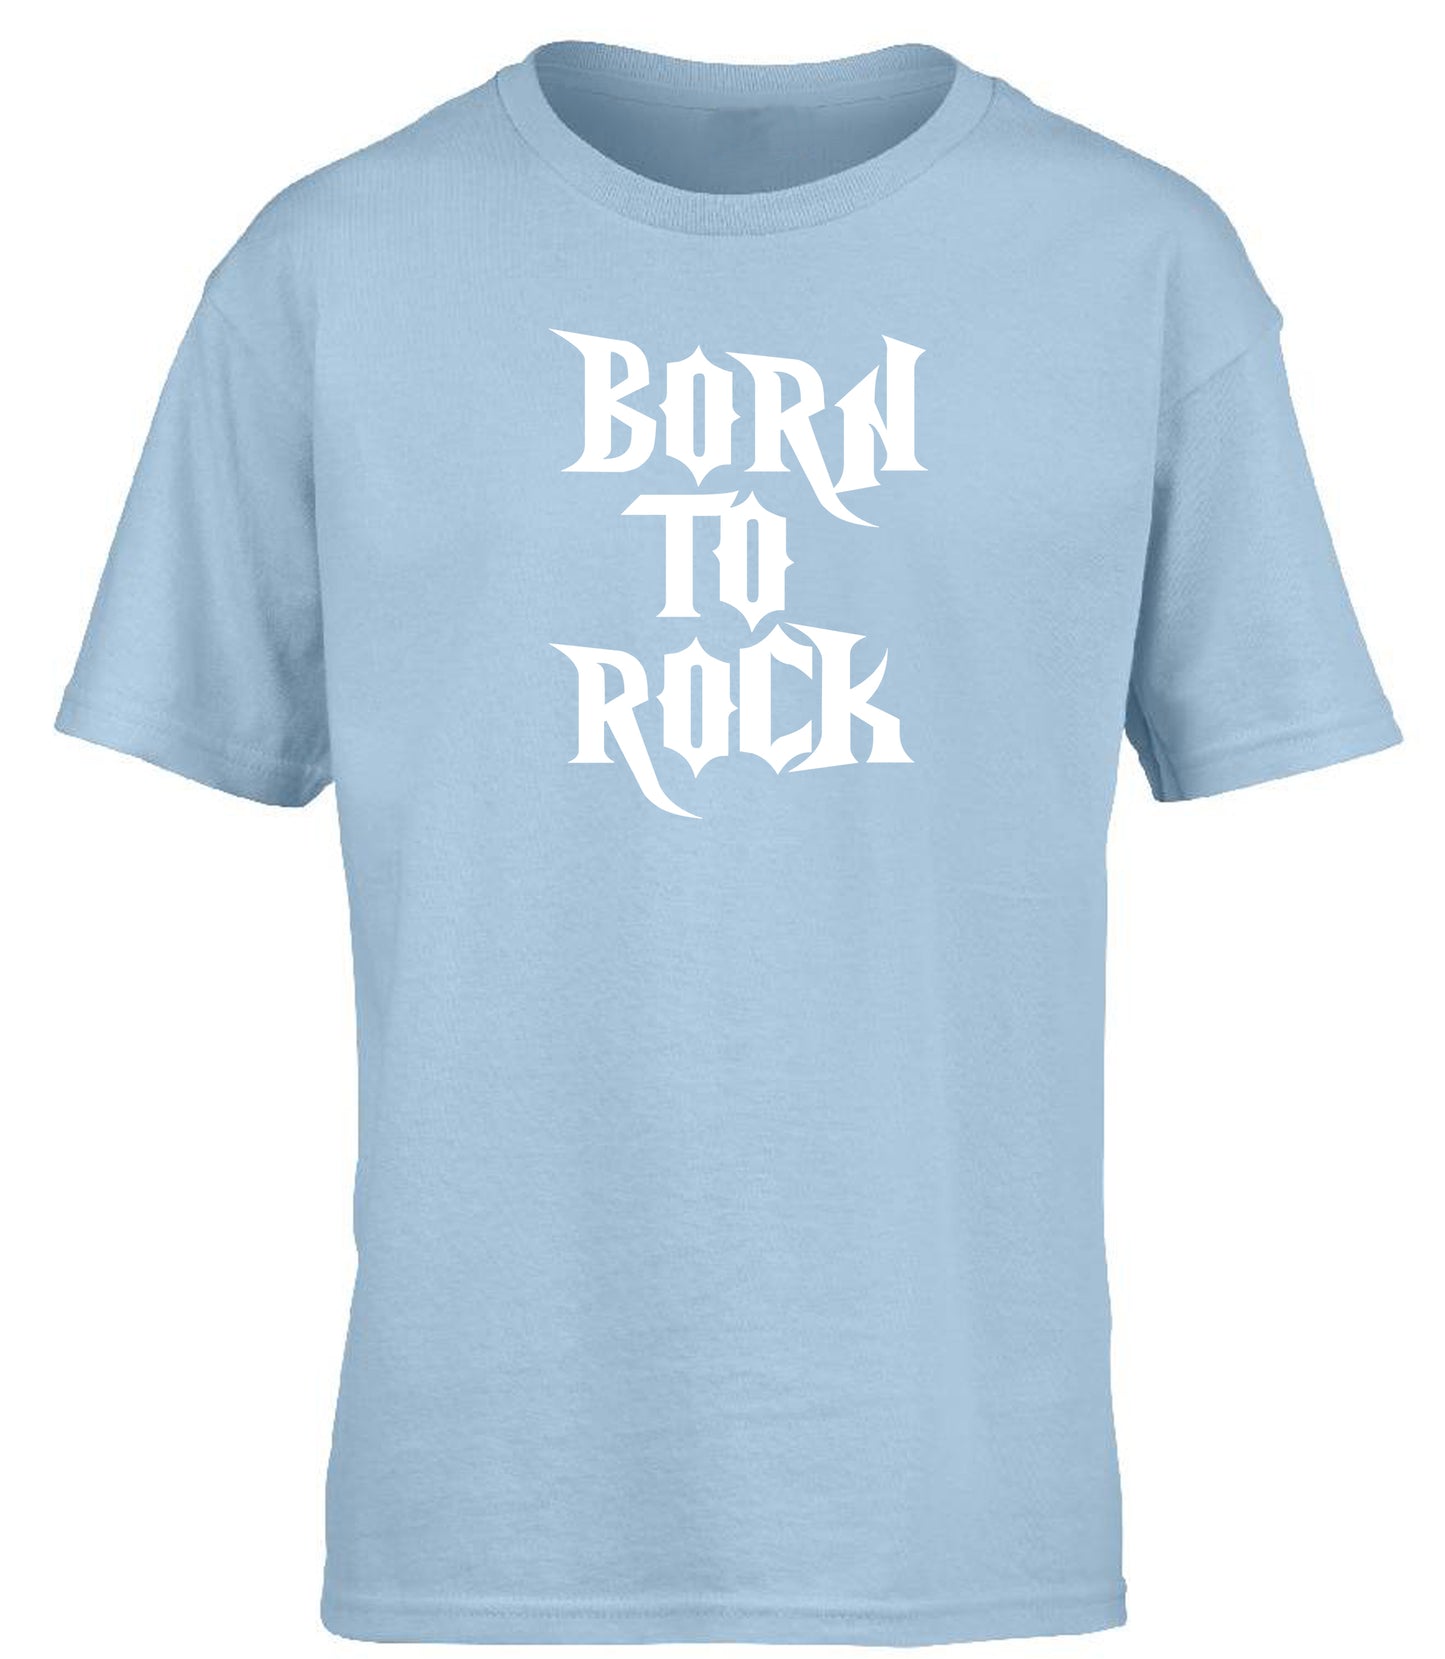 Born to rock children's T-shirt